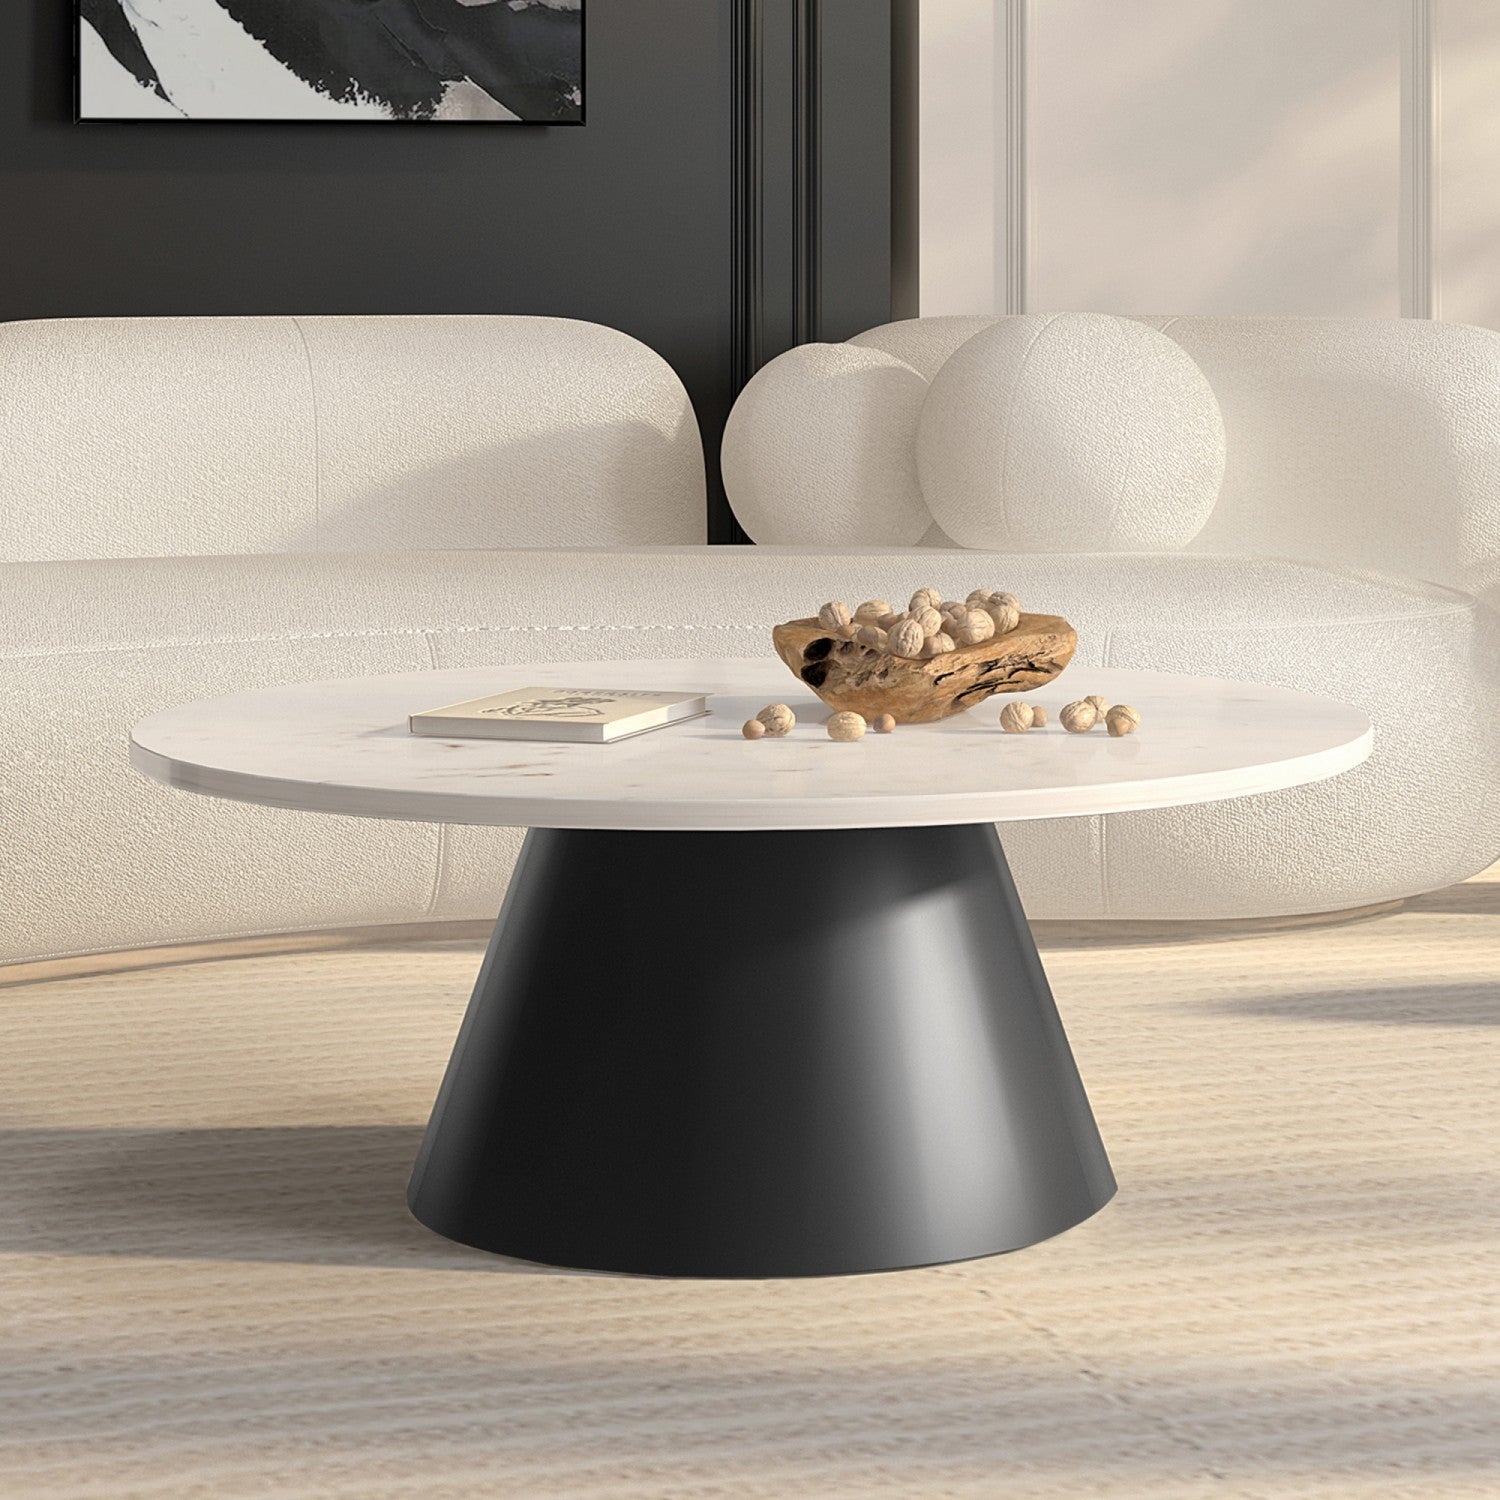 Zyler 2pcs Coffee Table set Home Office Garden furniture online marketplace.